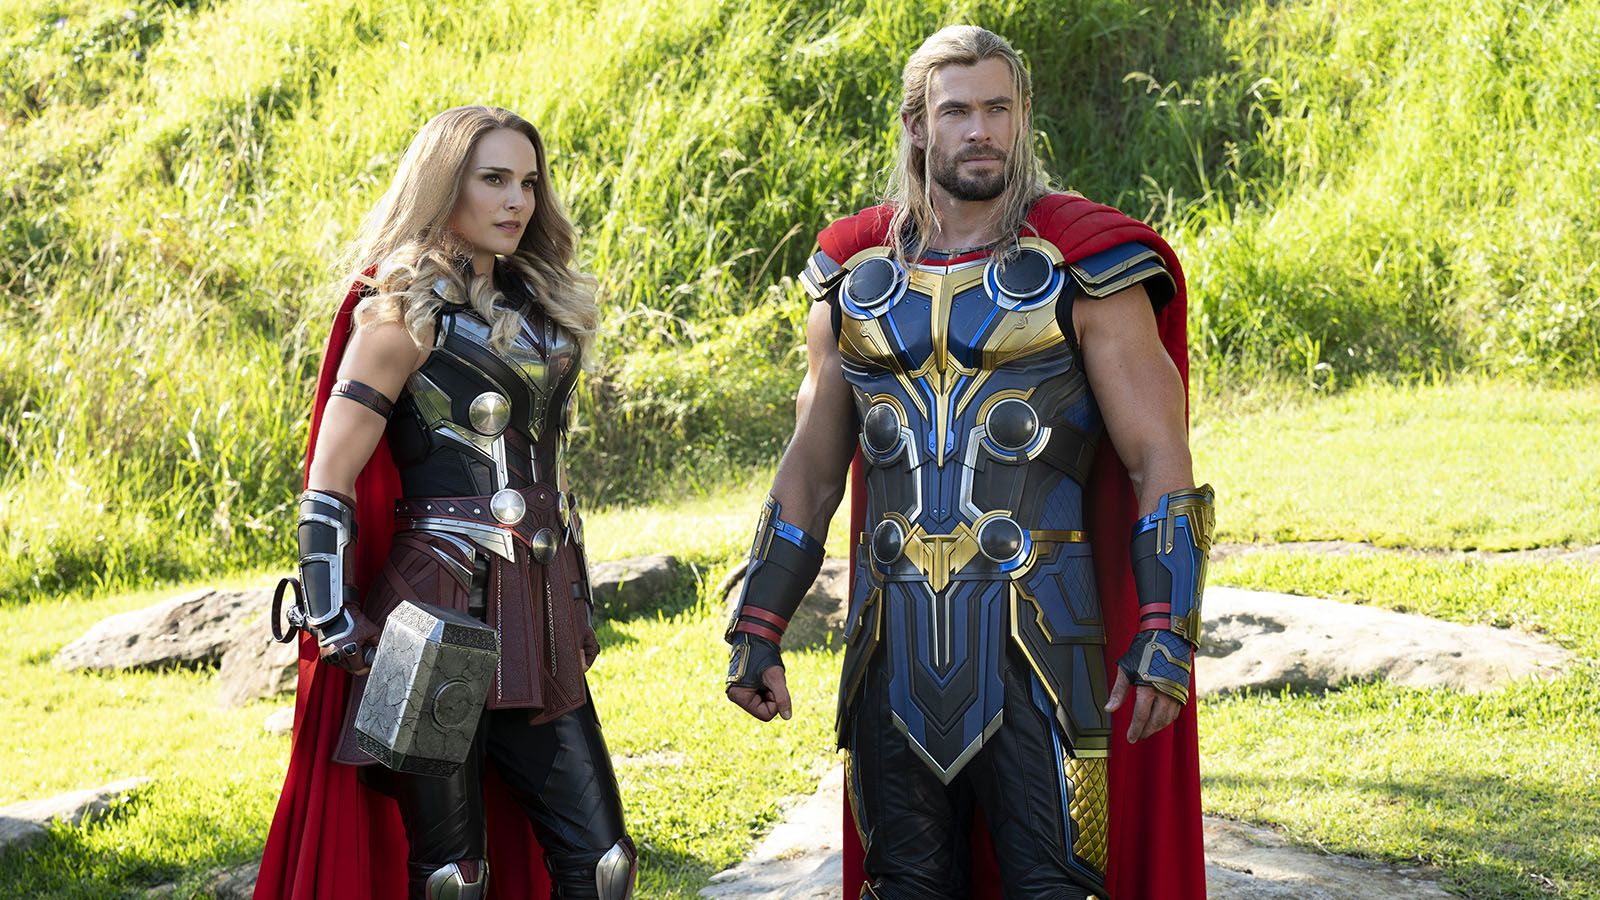 Natalie Portman and Chris Hemsworth star in "Thor: Love and Thunder."